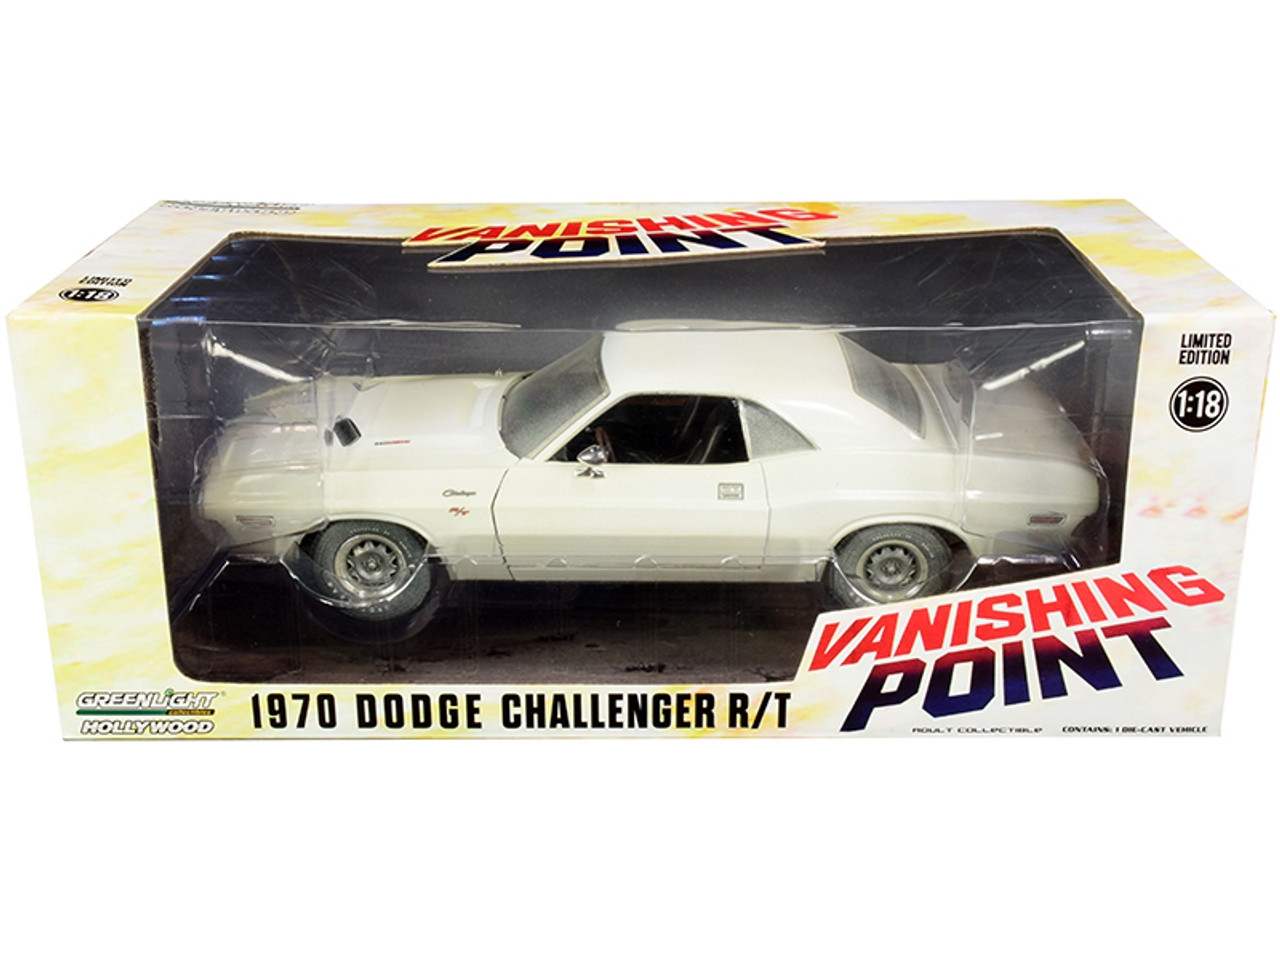 1/18 Greenlight 1970 Dodge Challenger R/T White (Weathered Version) "Vanishing Point" (1971) Movie Diecast Car Model